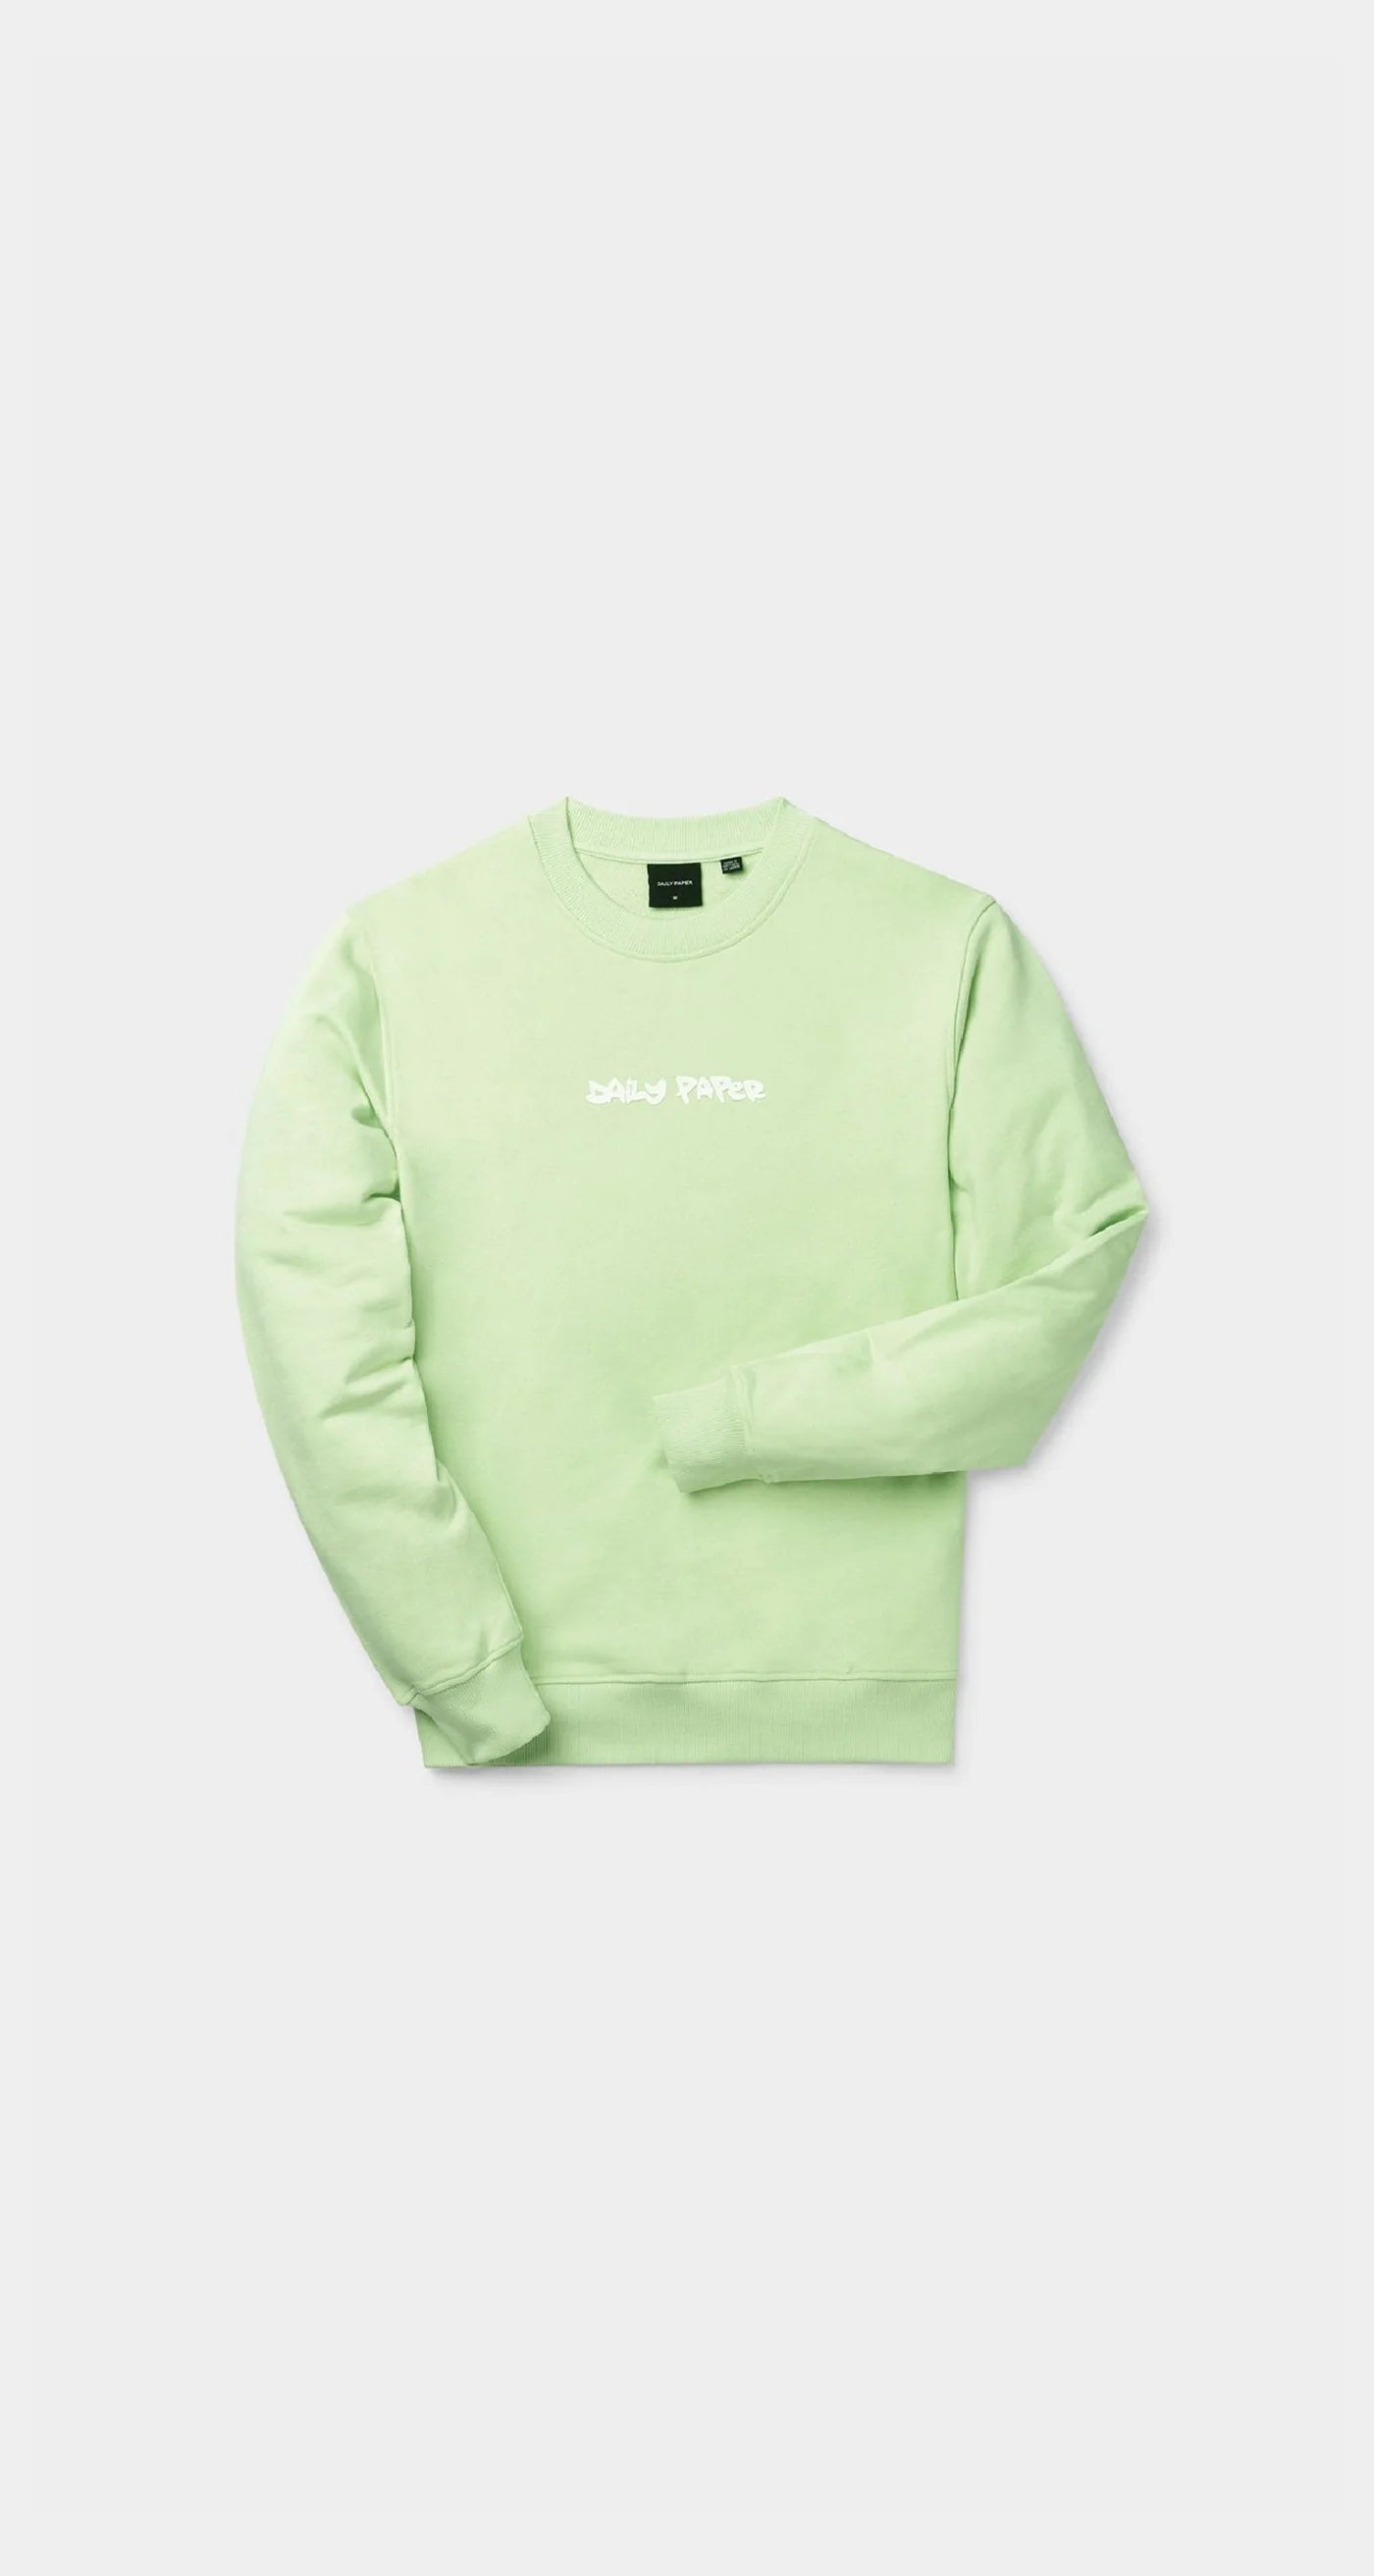 Mudi Sweater seacrest green